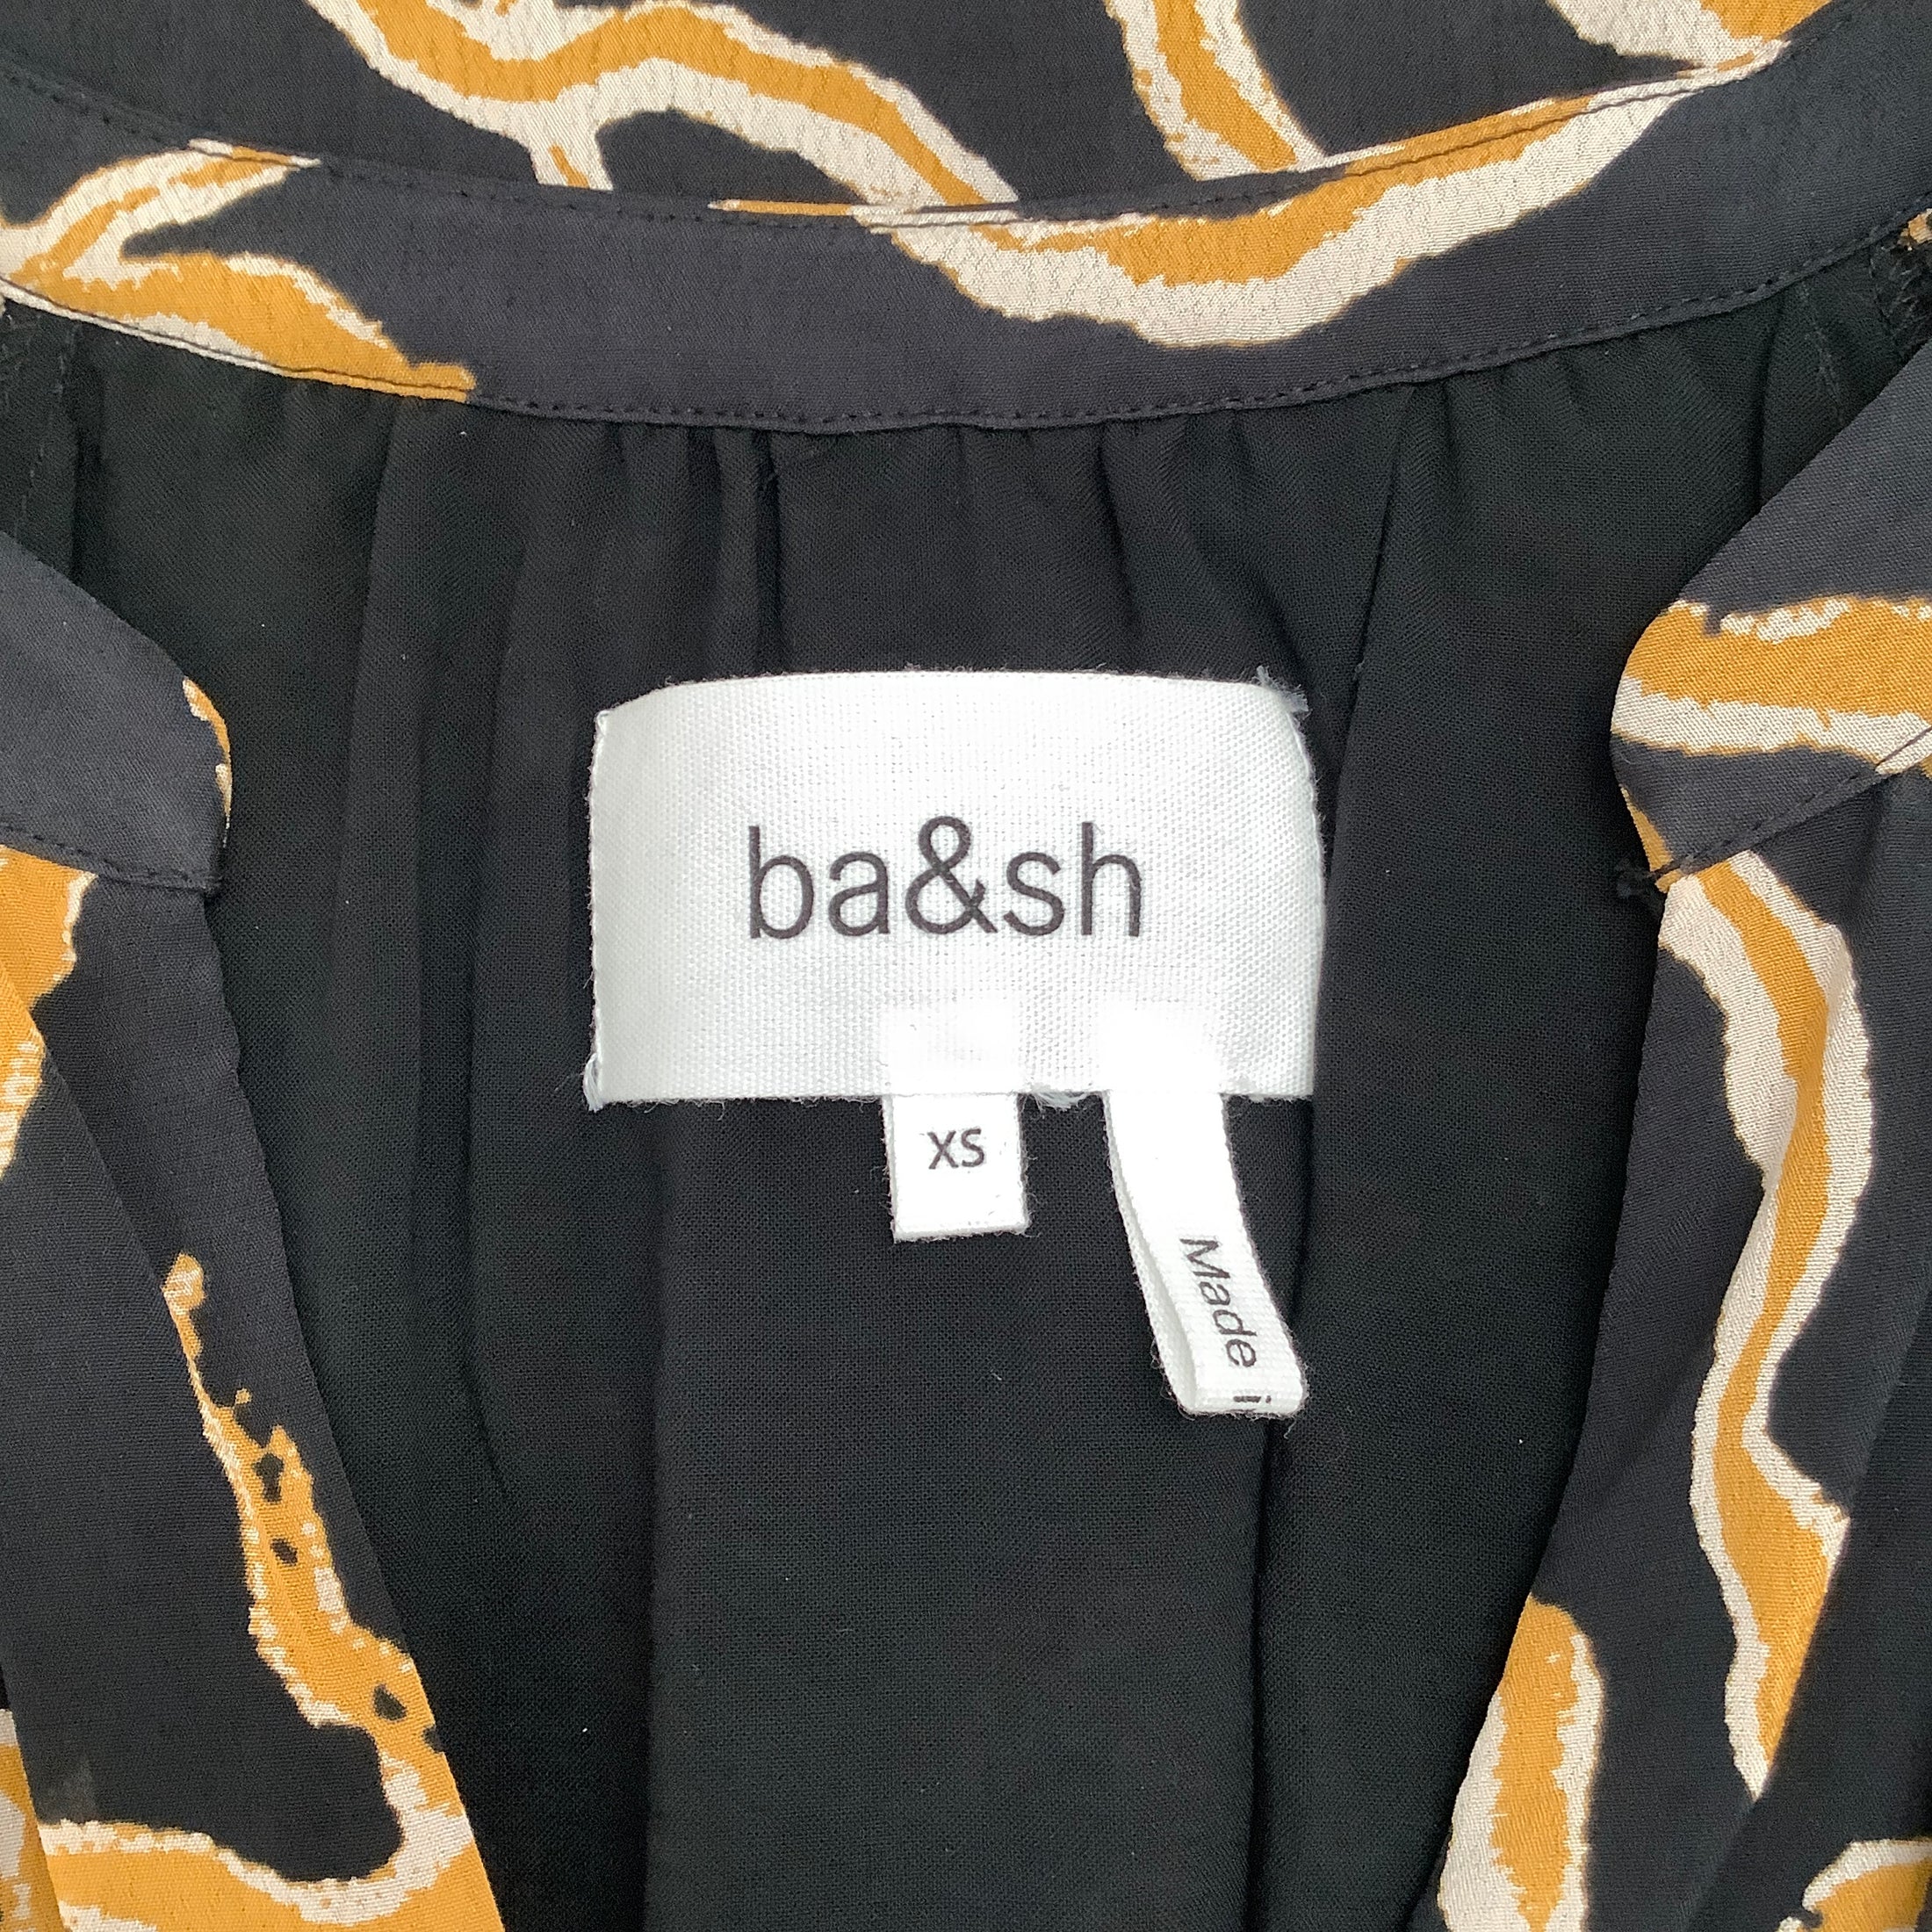 ba&sh Black Multi Candice Work/Office Dress